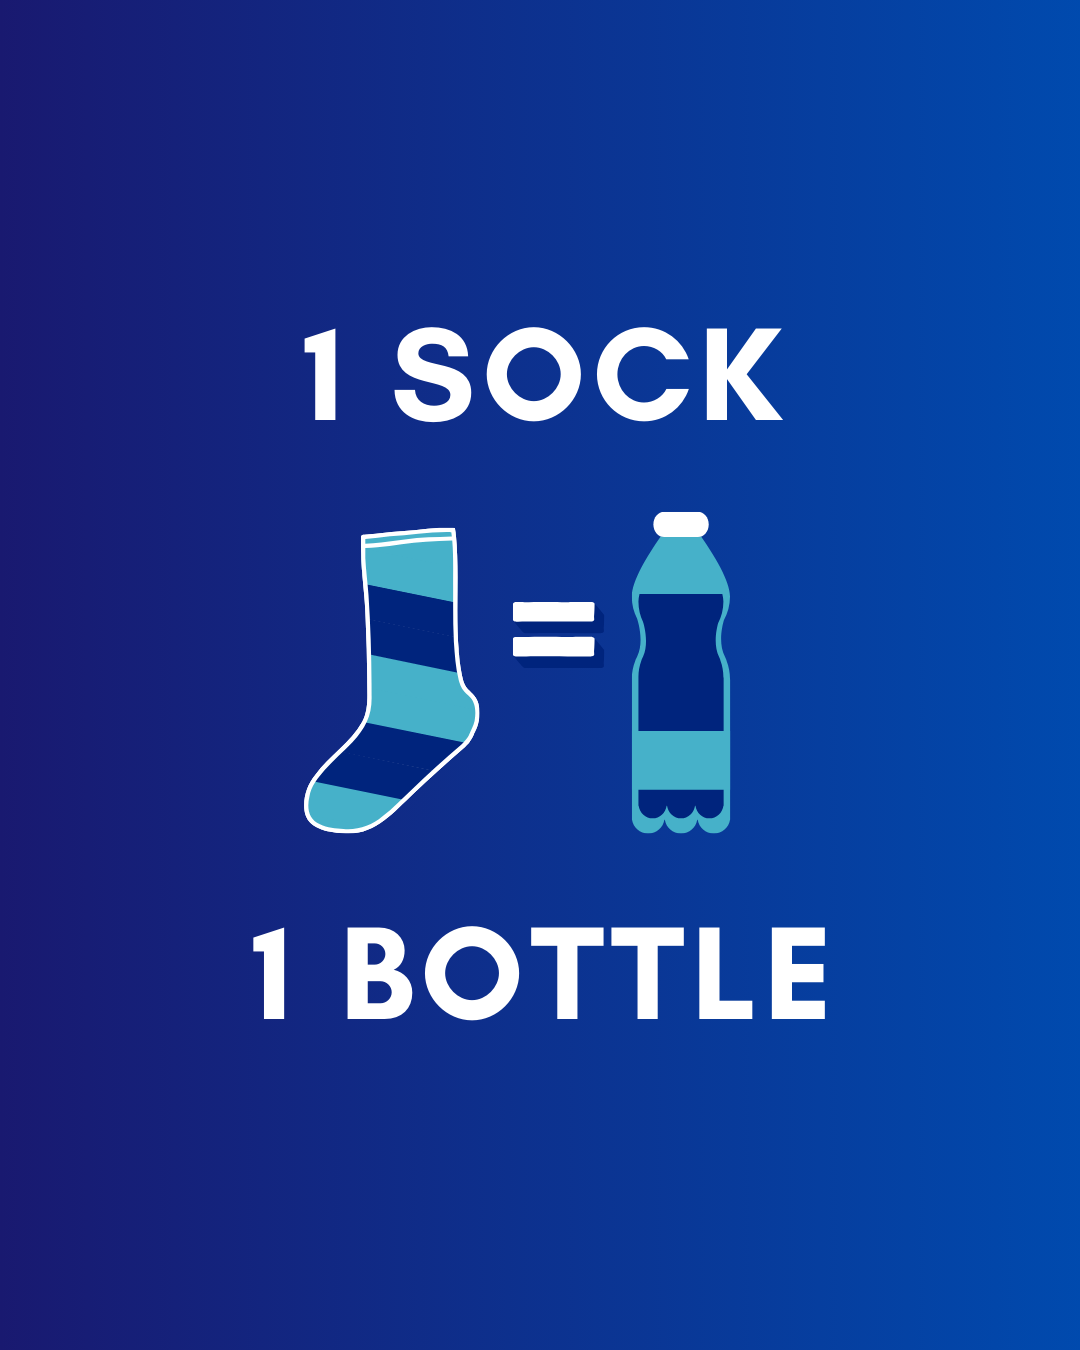 Ecofriendly socks made from plastic bottles